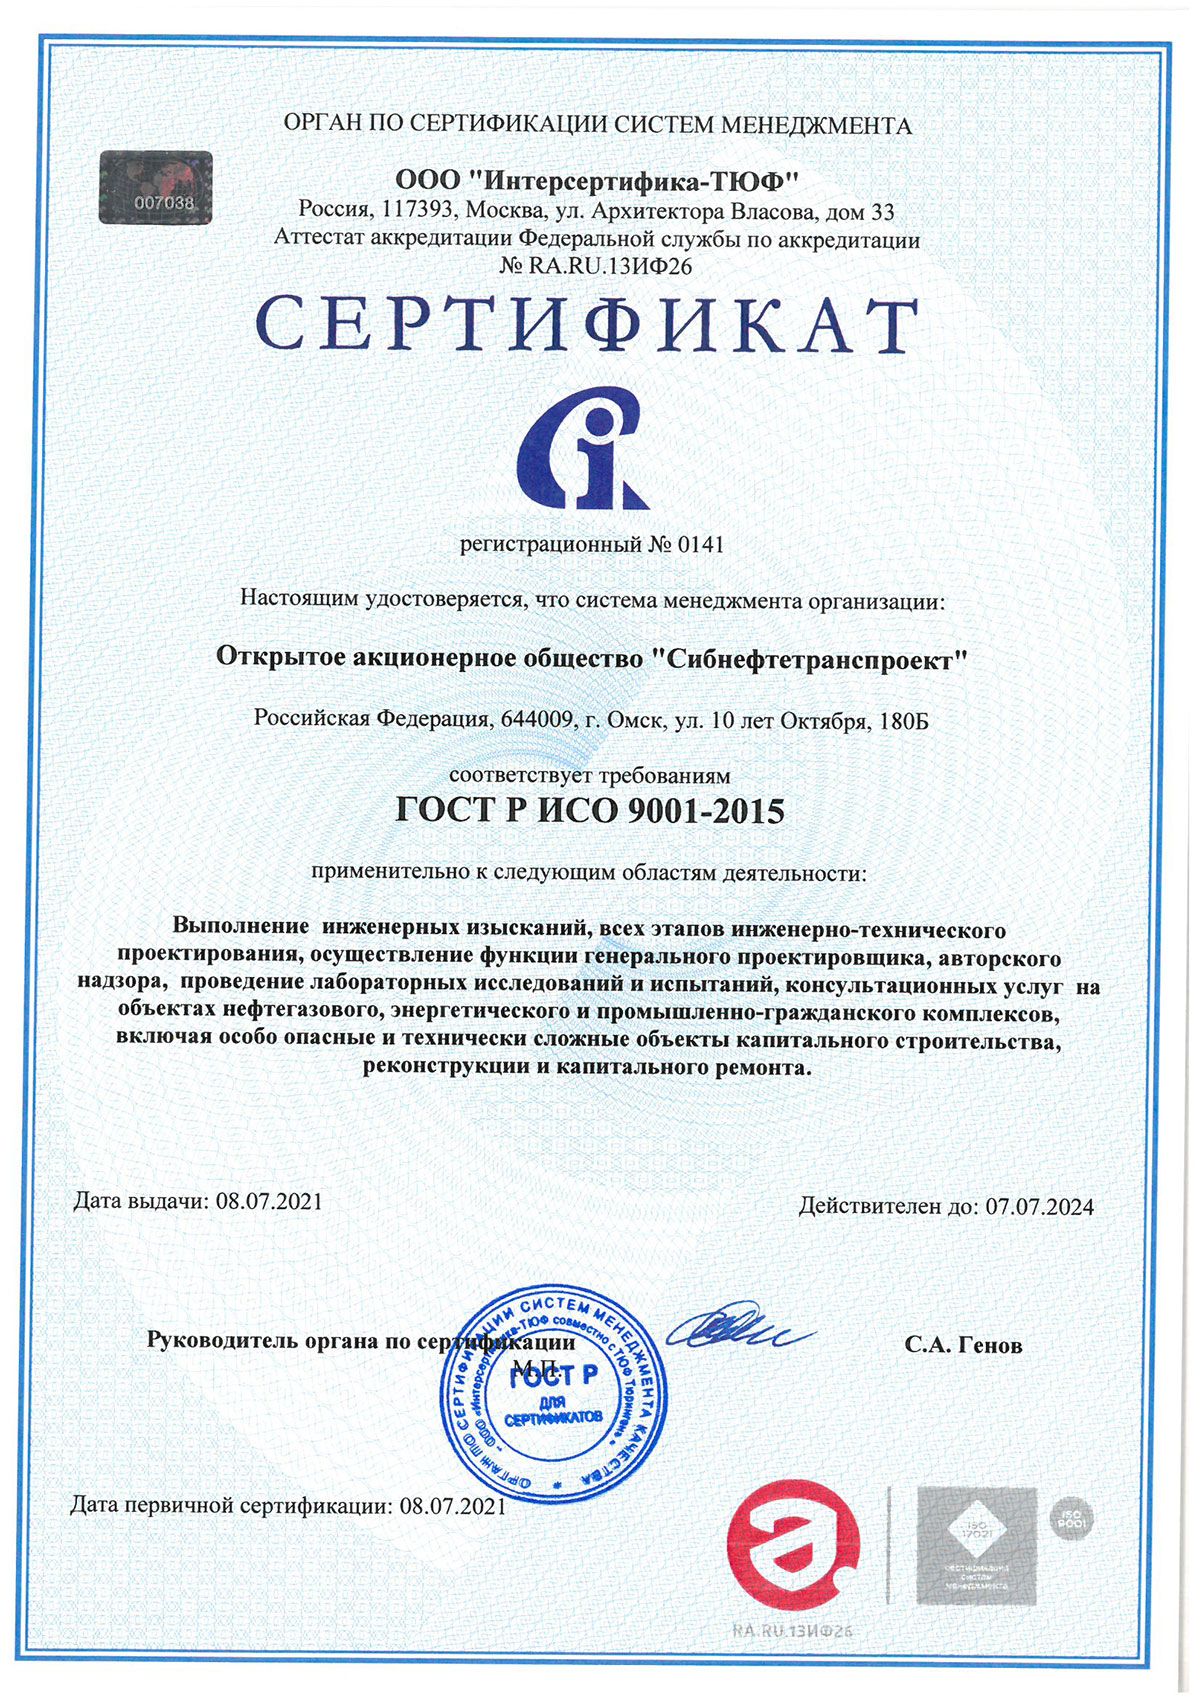 ООО &laquo;Интерсертифика-ТЮФ&raquo; Сертификат ГОСТ Р ИСО 9001-2015 от 08.07.2021